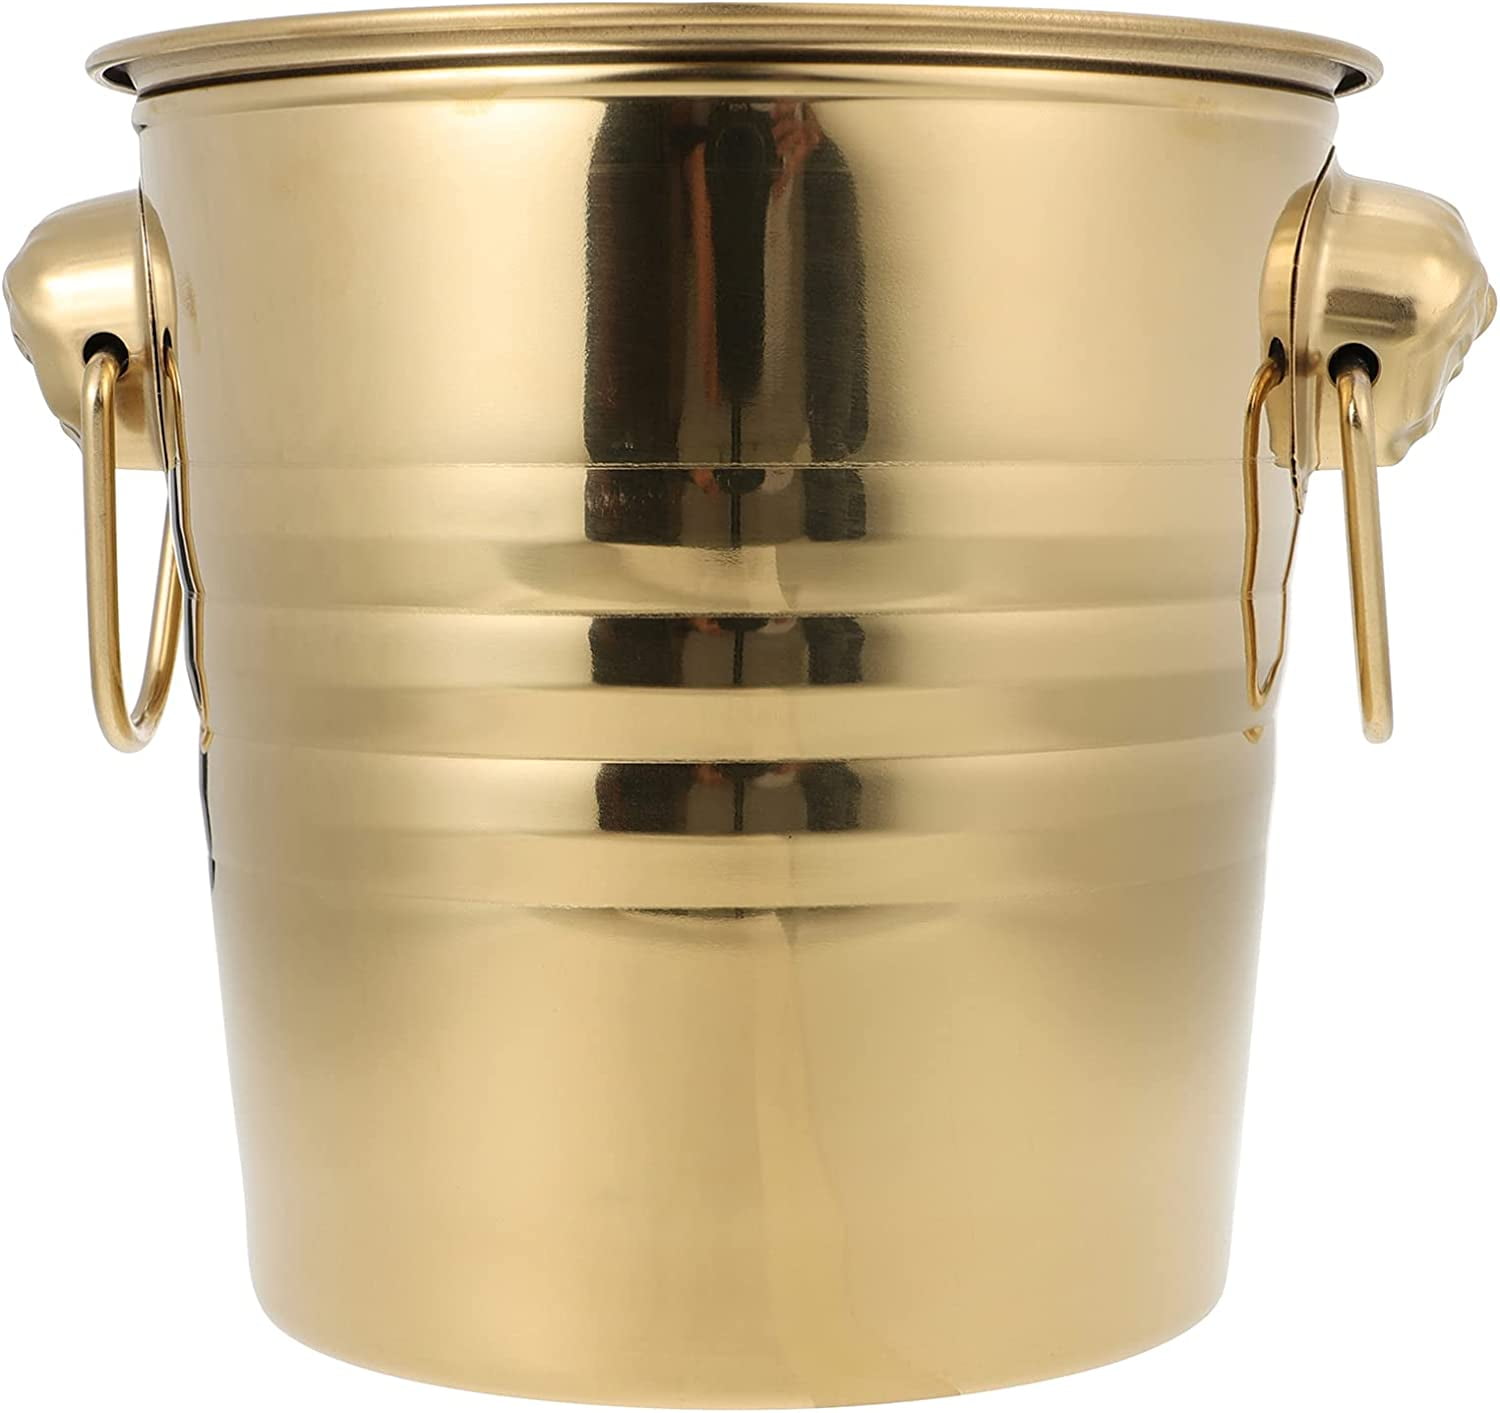 Sunnydaze 5 Gallon Stainless Steel Ice Bucket Beverage Holder And